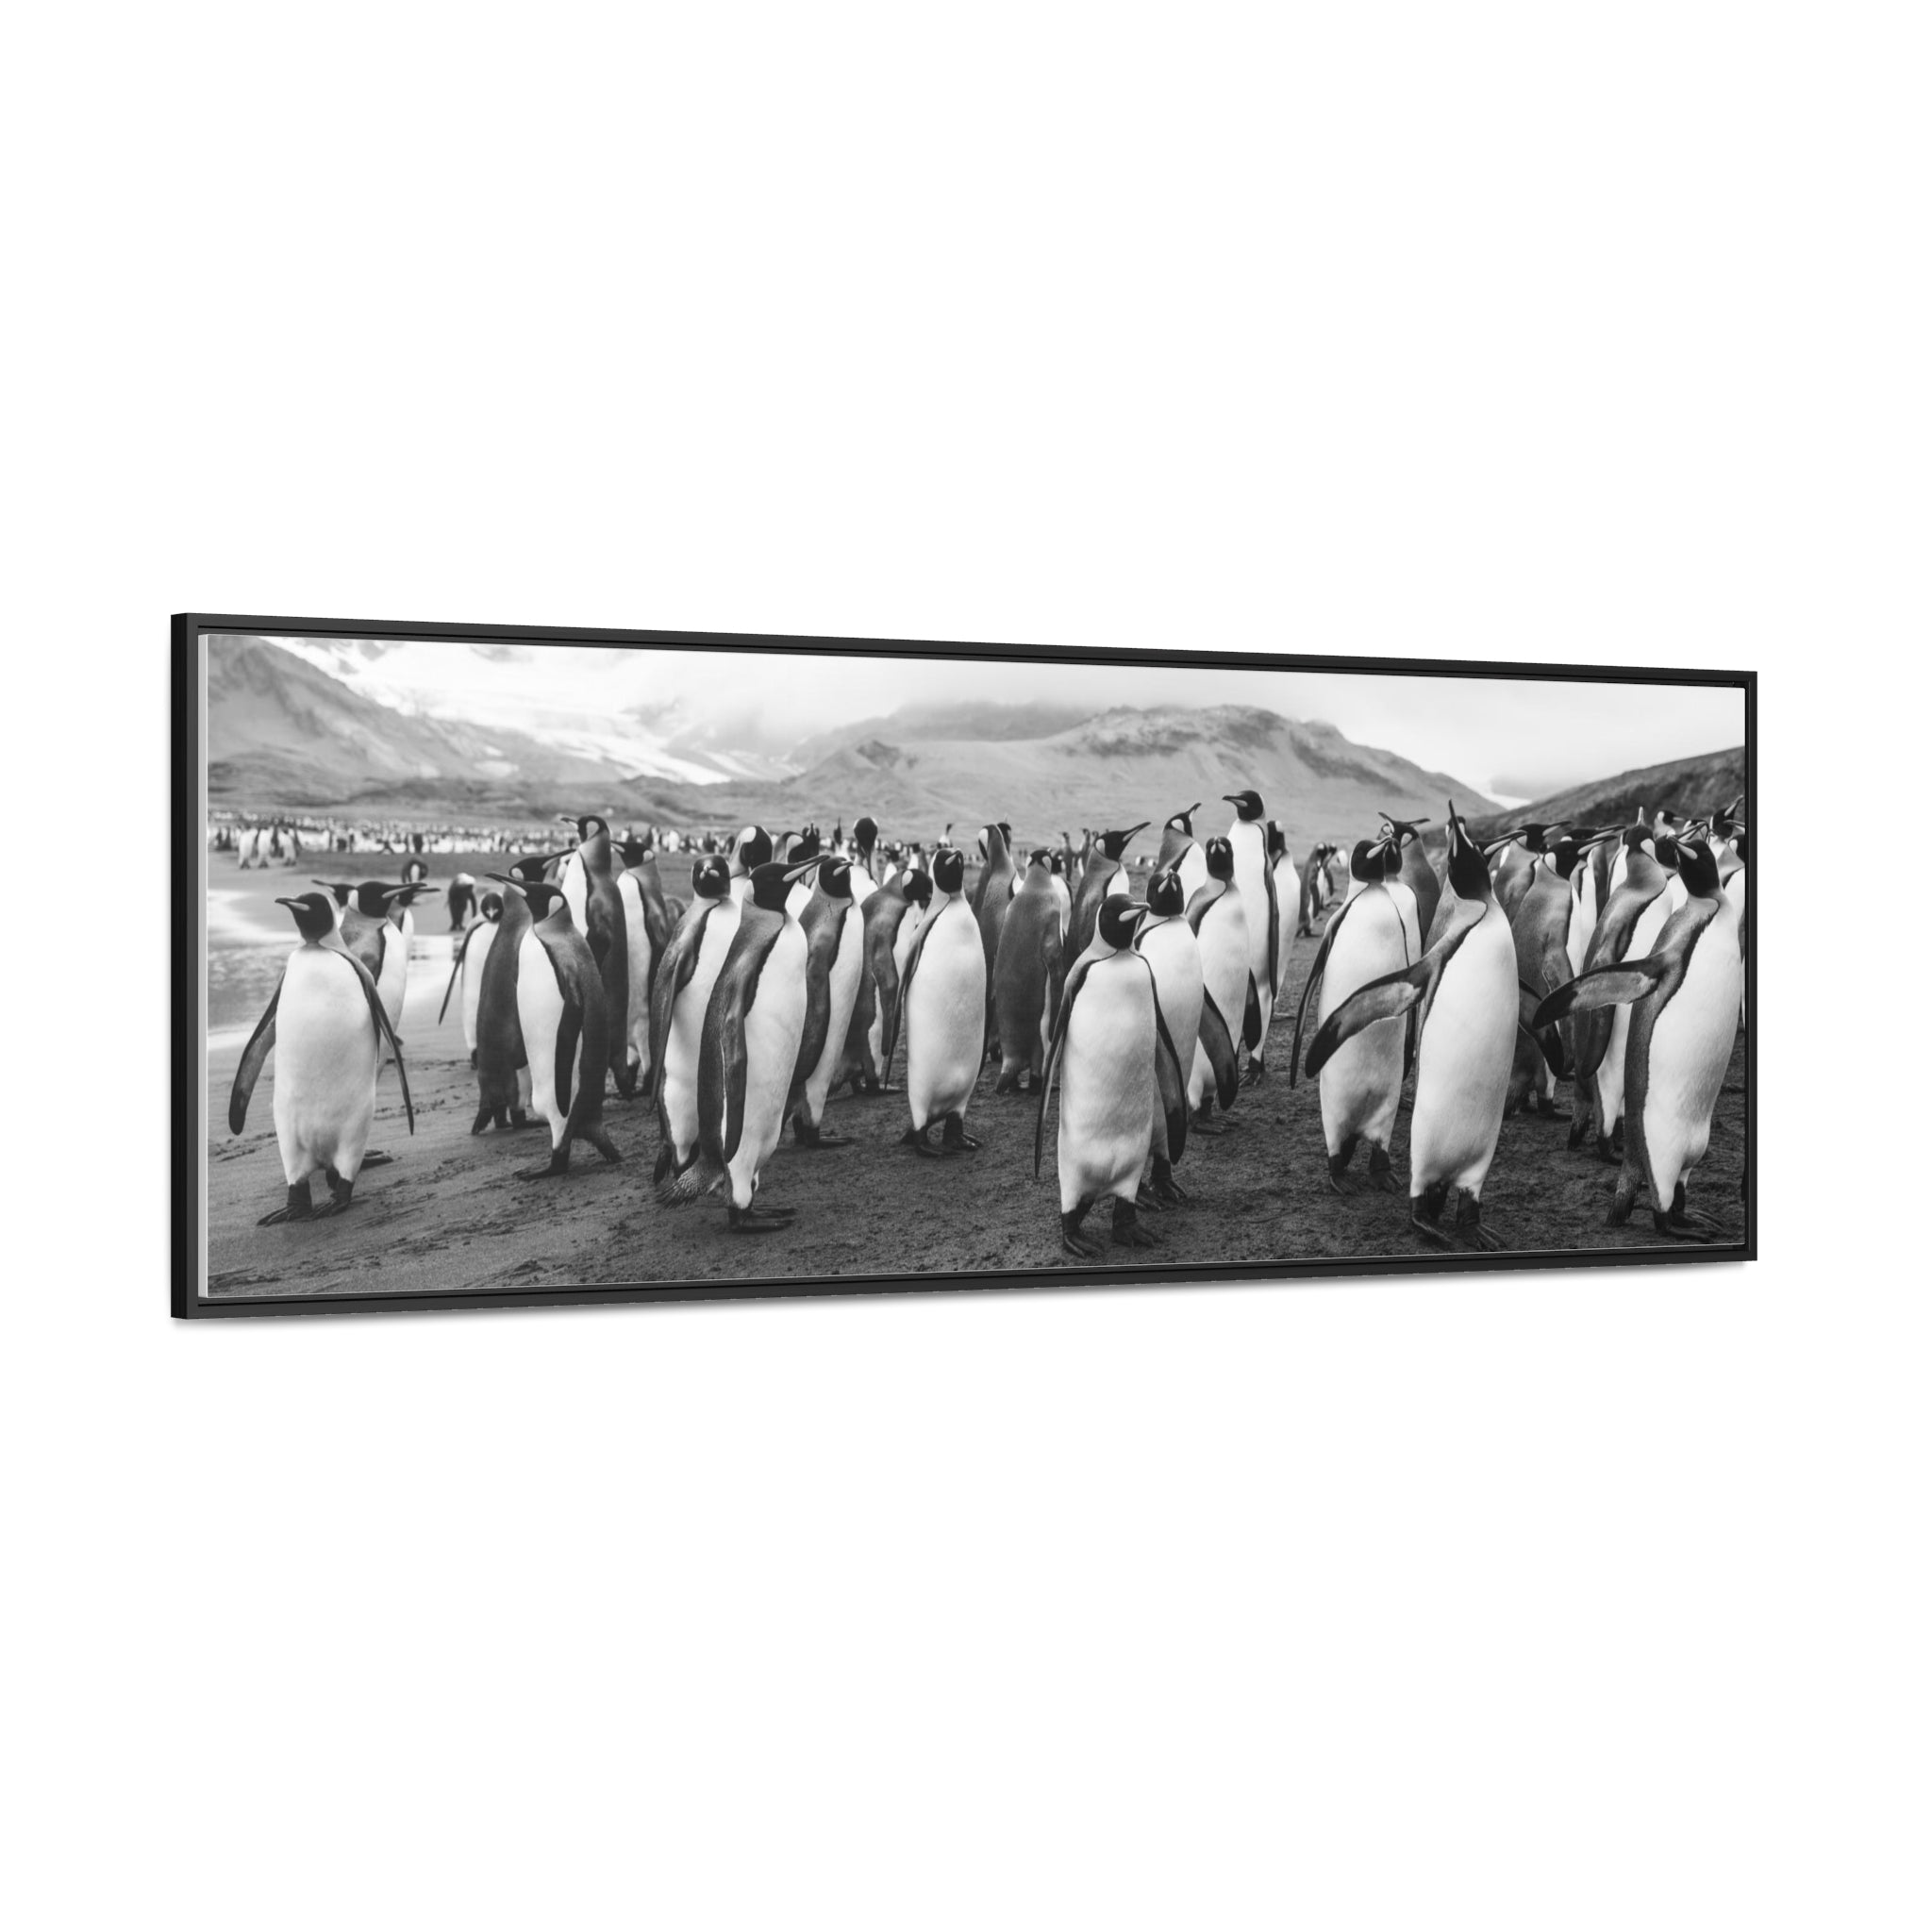 King Penguins, Gallery Canvas Wraps, Horizontal Frame